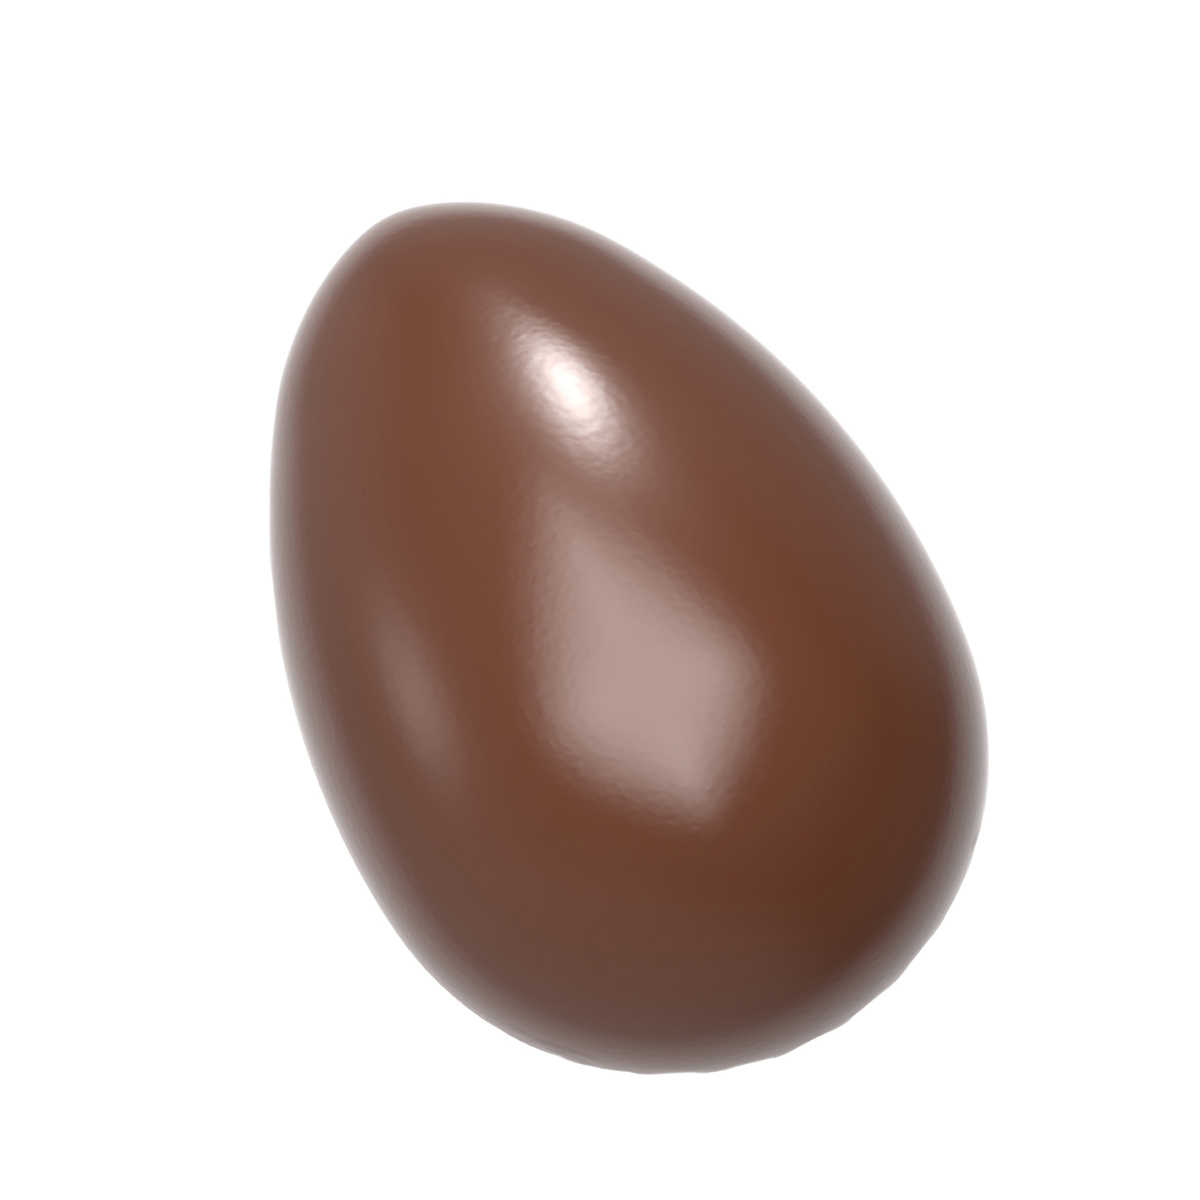 Se Professionel chokoladeform i polycarbonat - Smooth egg 3,3 cm CW1582 hos BageTid.dk